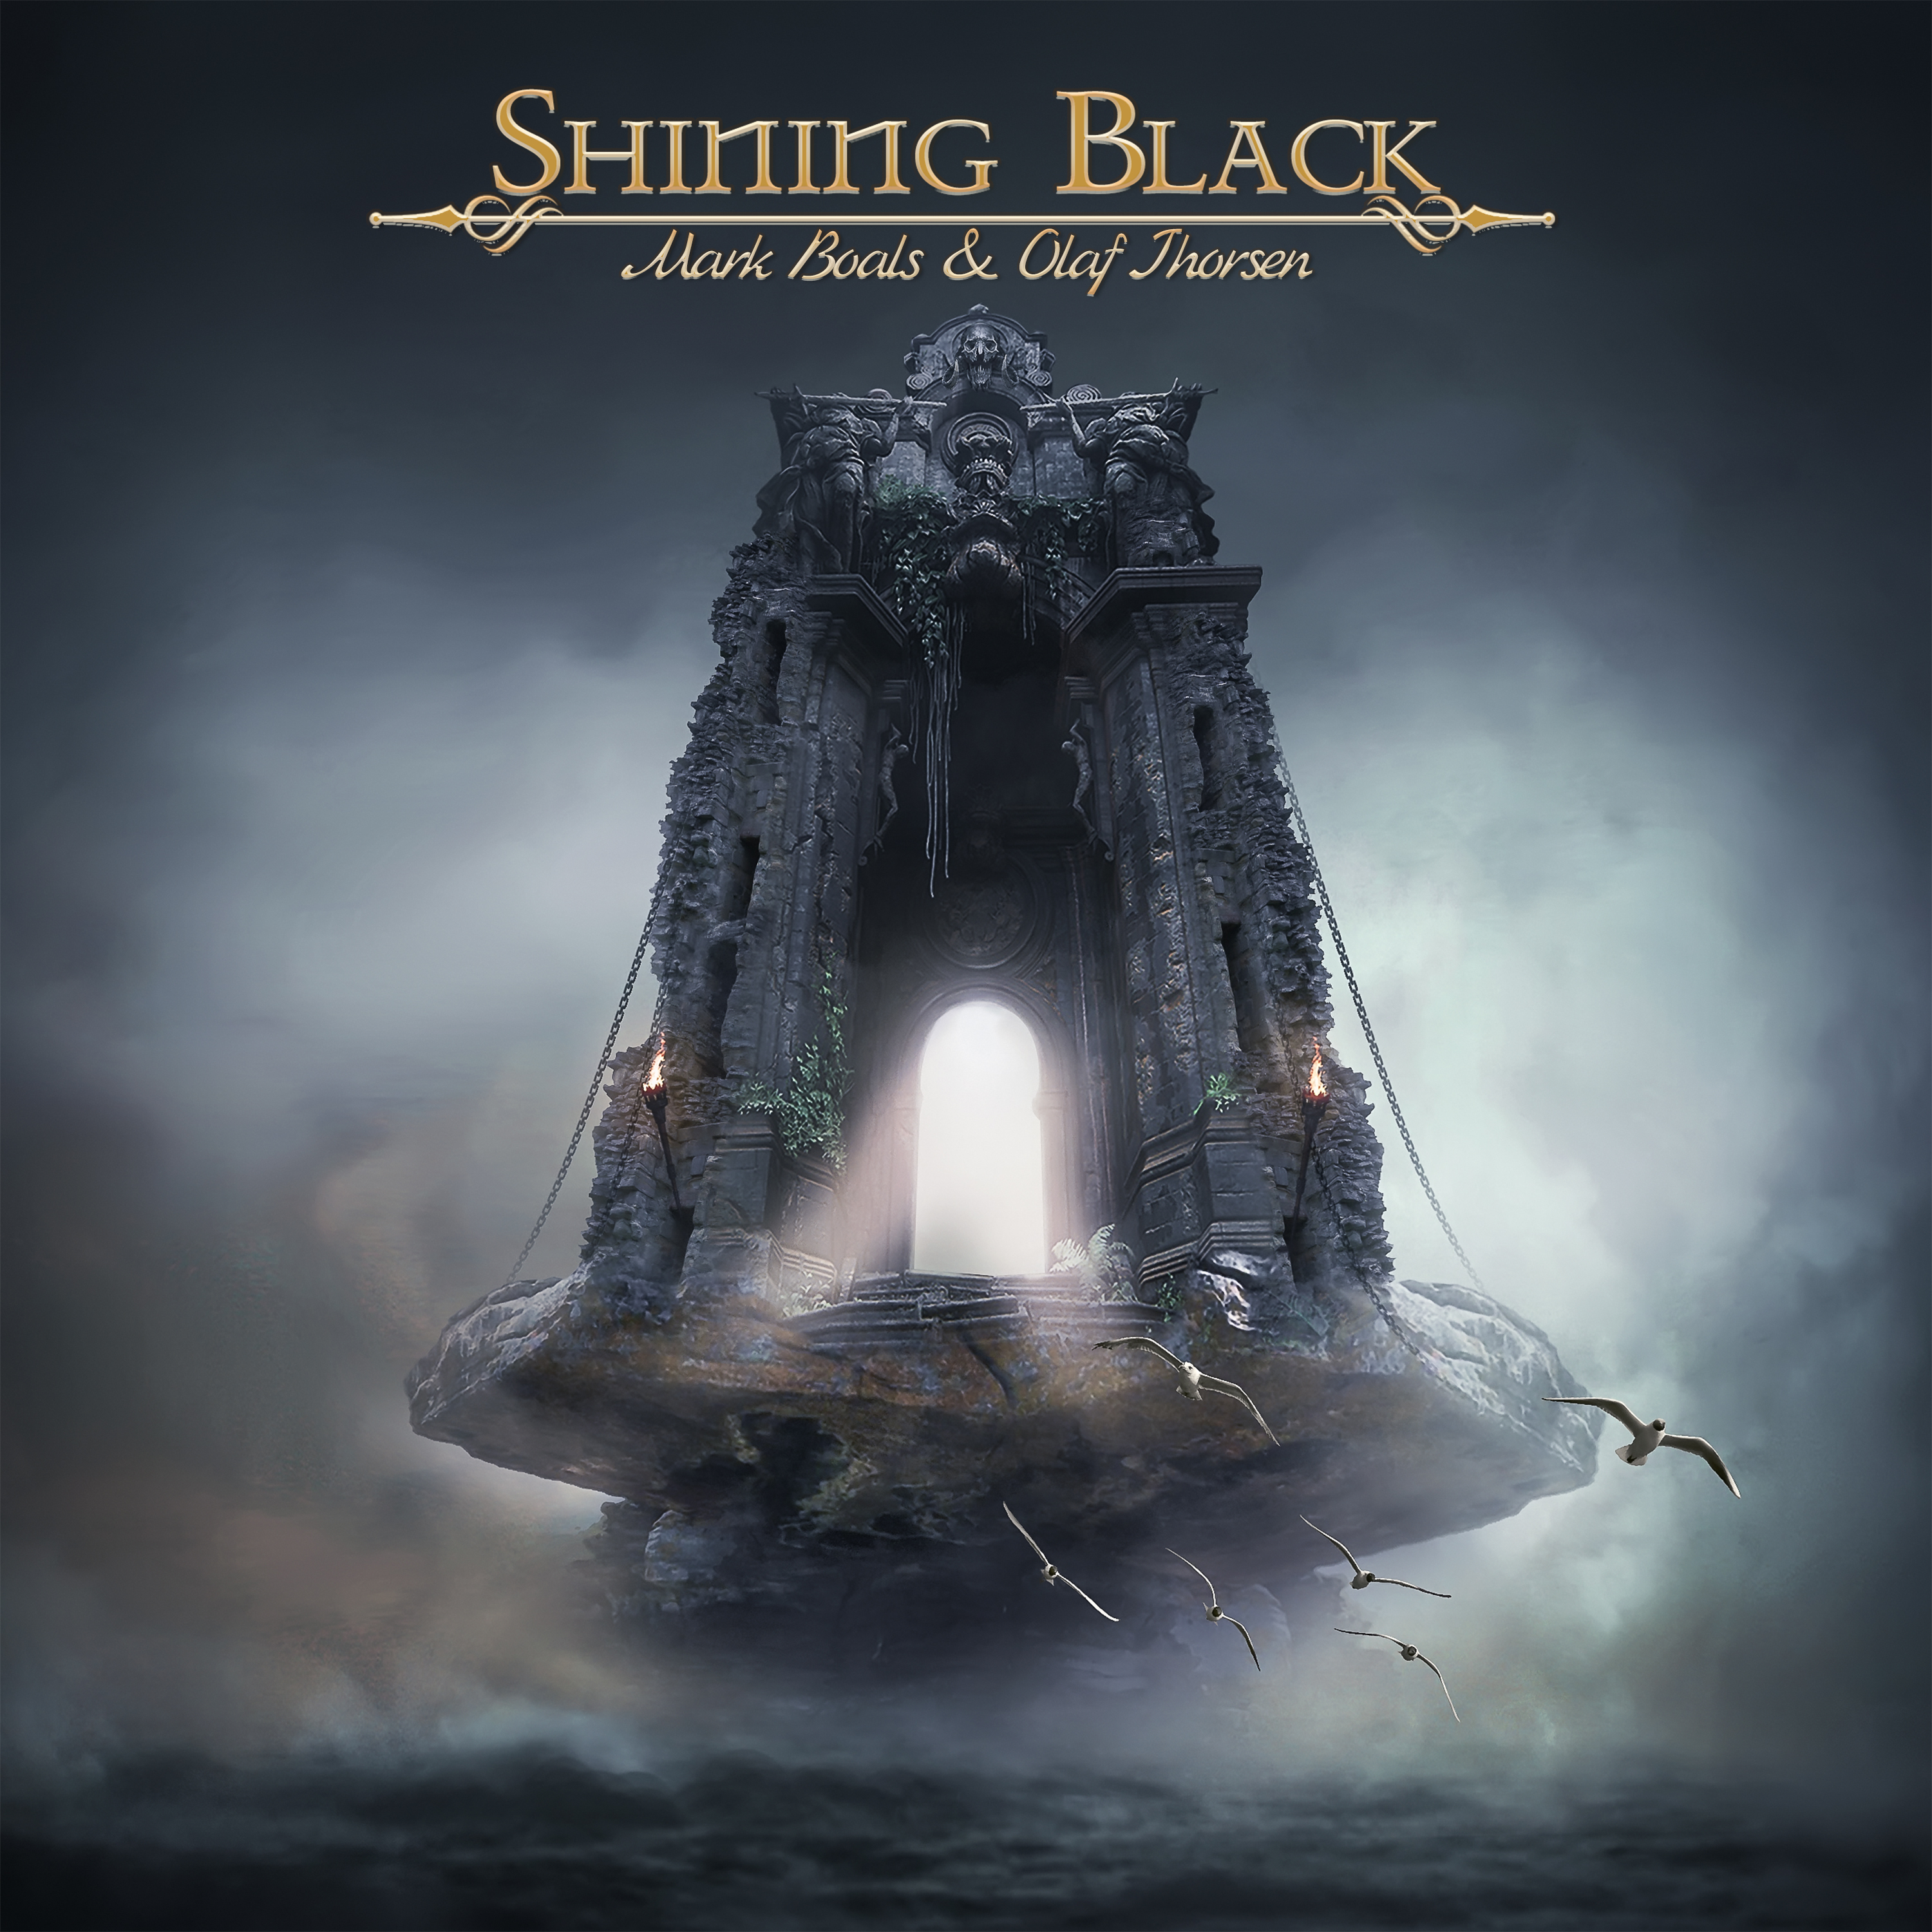 Shining black ft. Boals & Thorsen - Shining Black Ft. Boals & Thorsen - CD